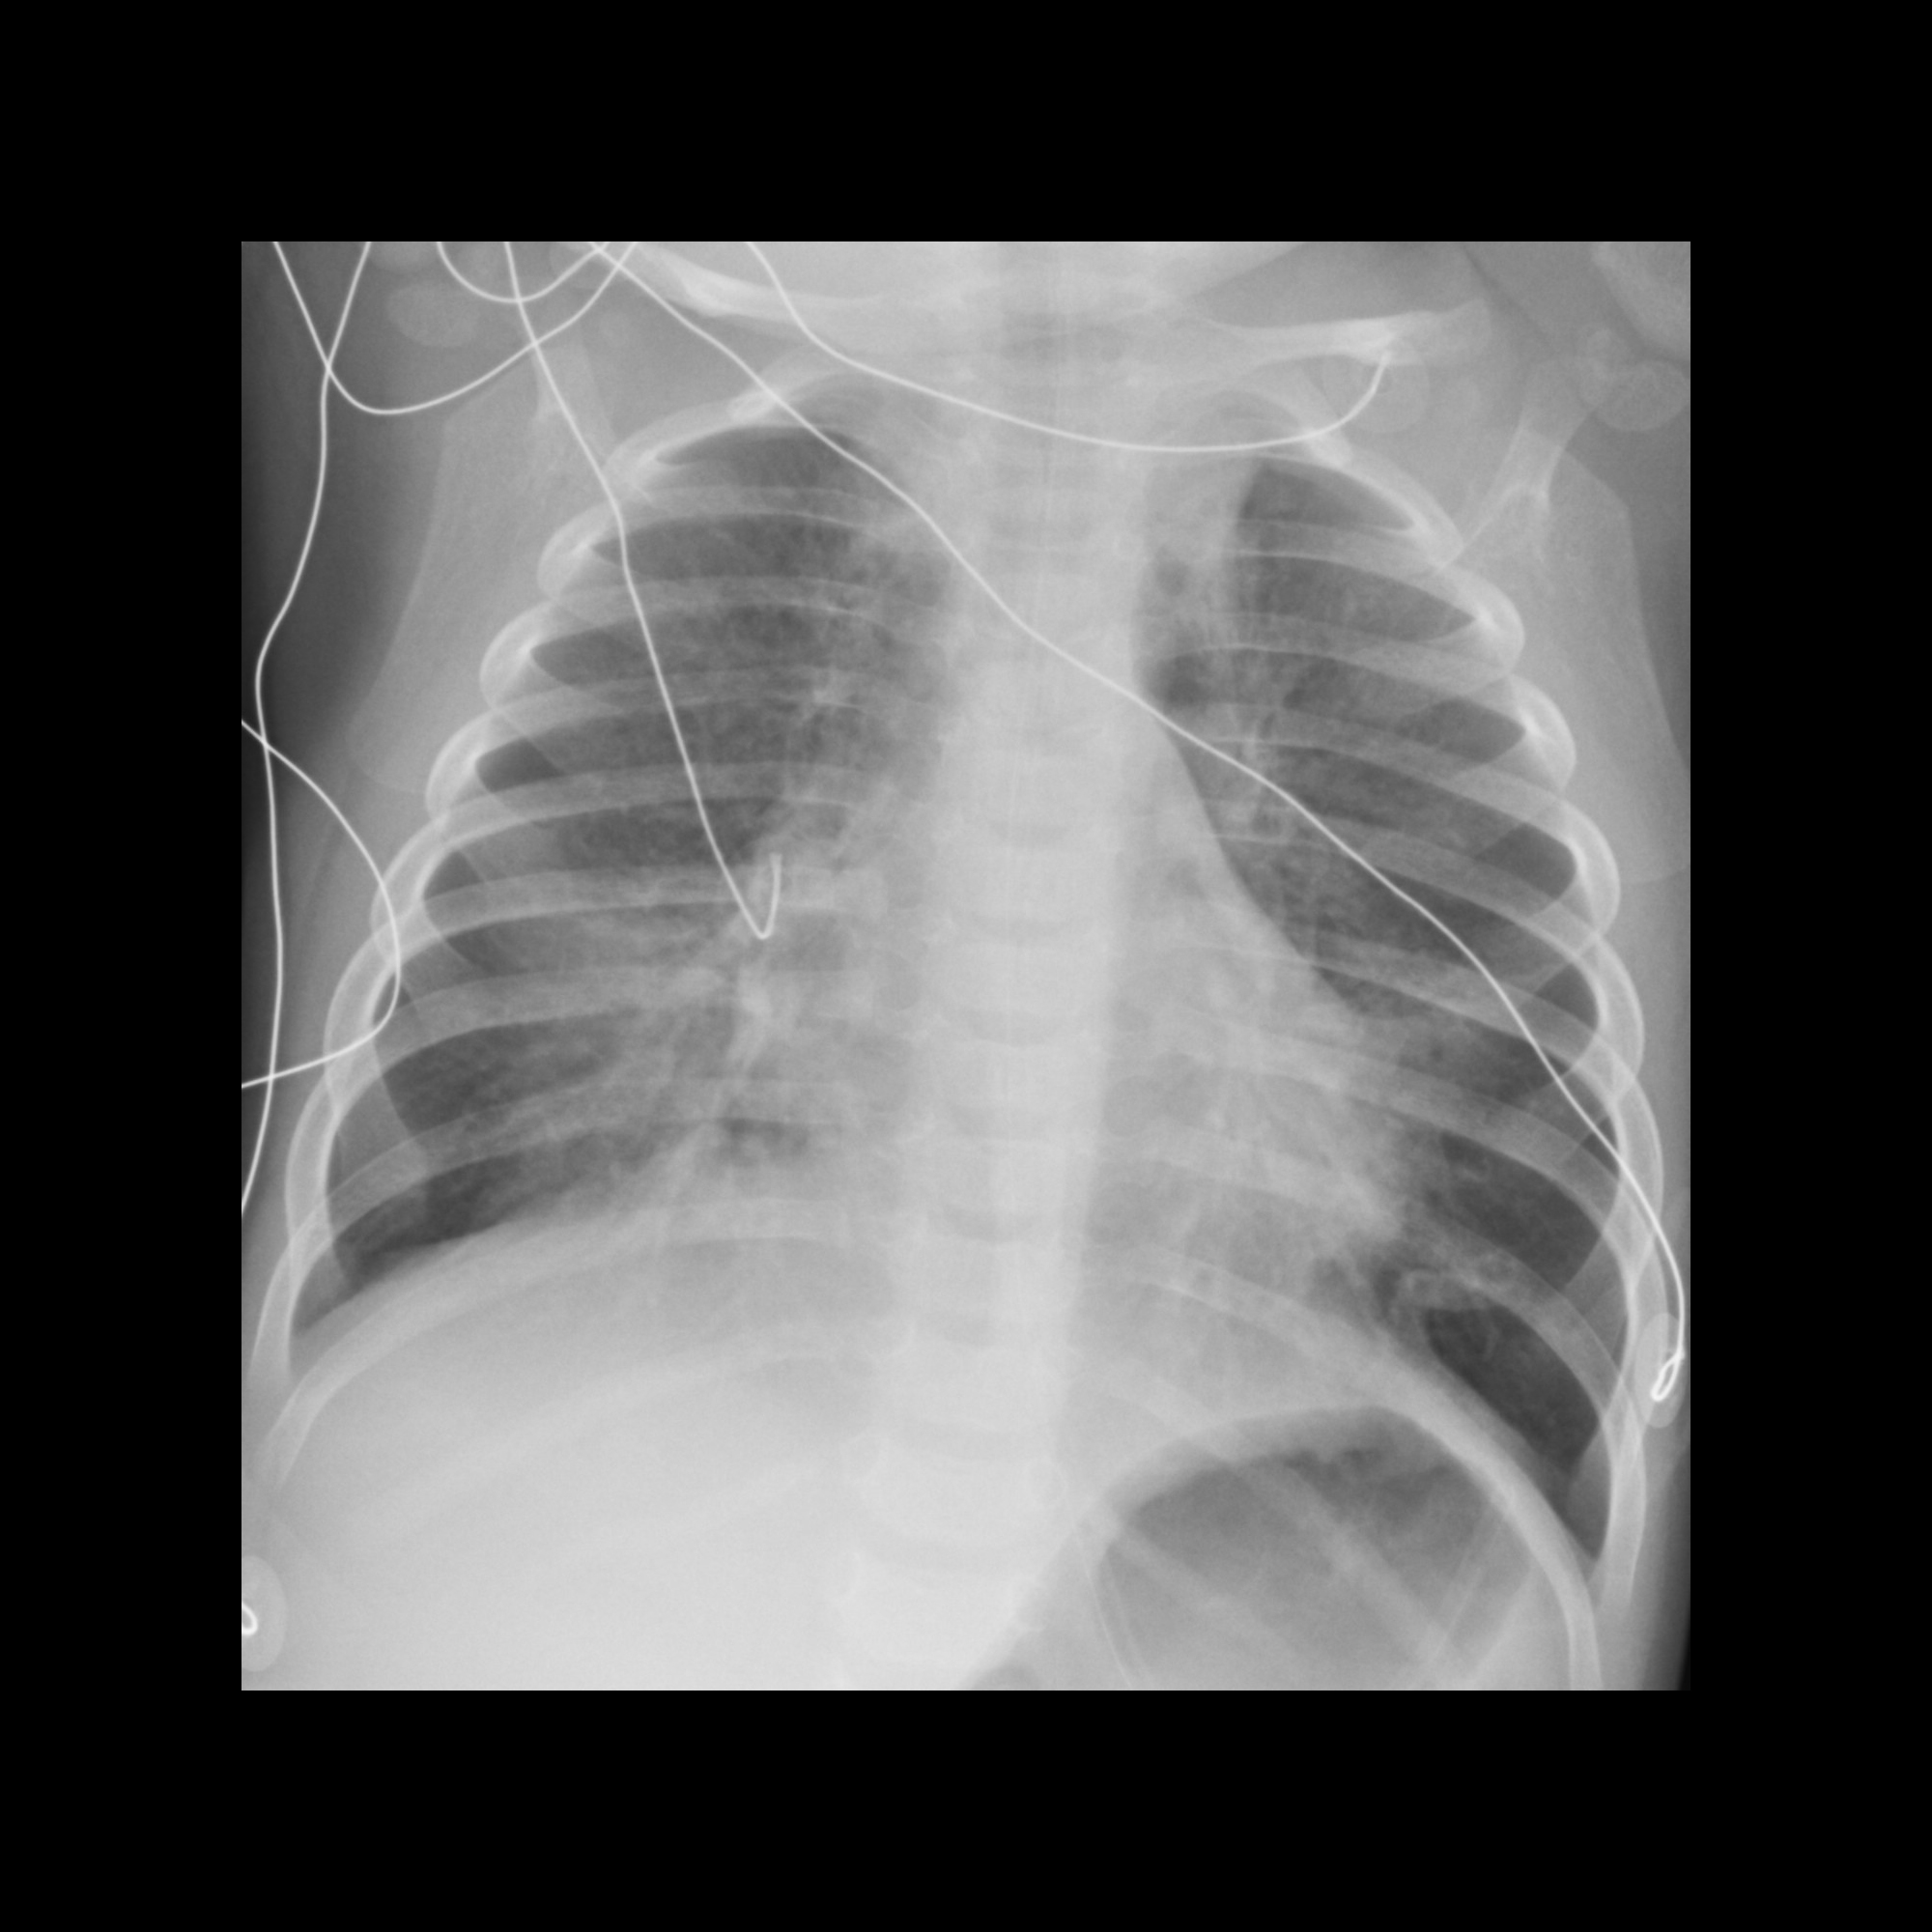 Scimitar syndrome | Radiology Case | Radiopaedia.org